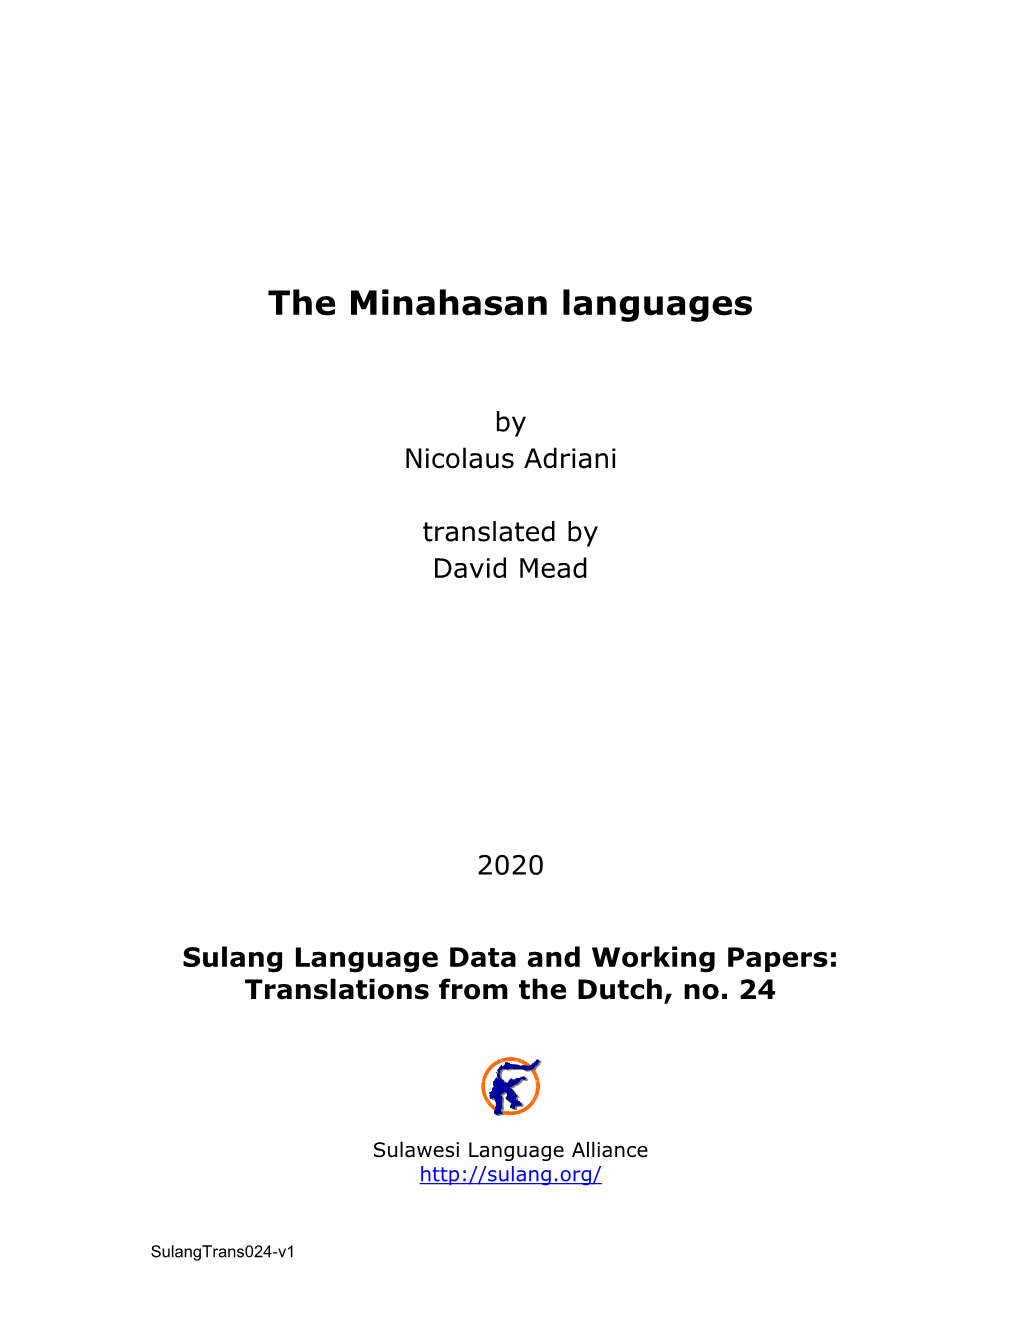 The Minahasan Languages = De Minahasische Talen